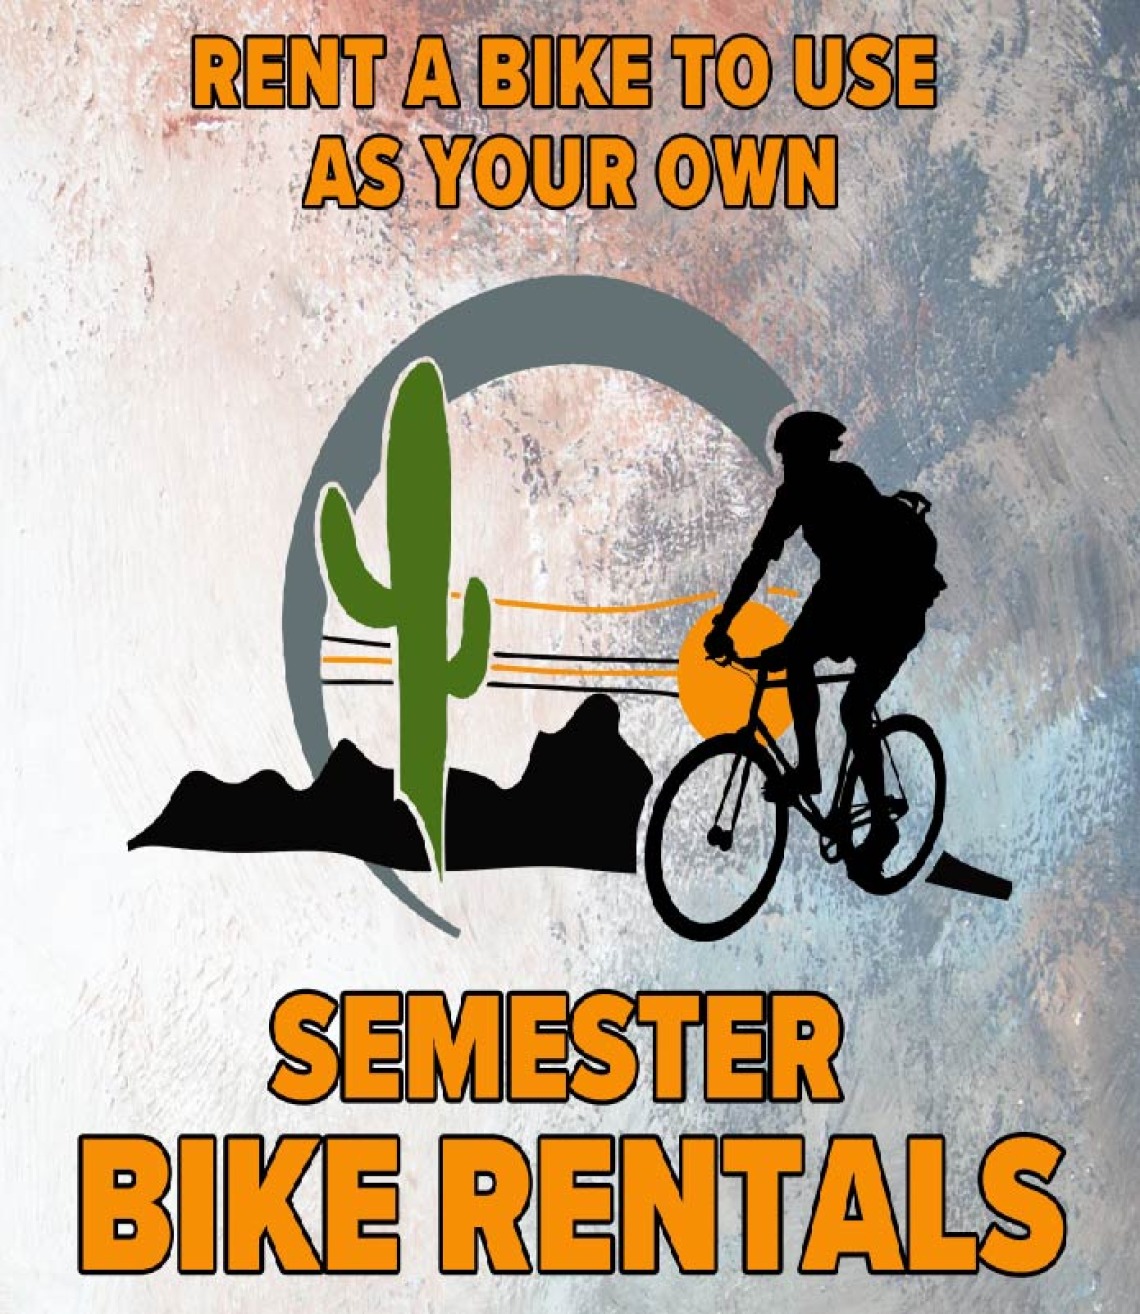 image advertising semester bike rentals